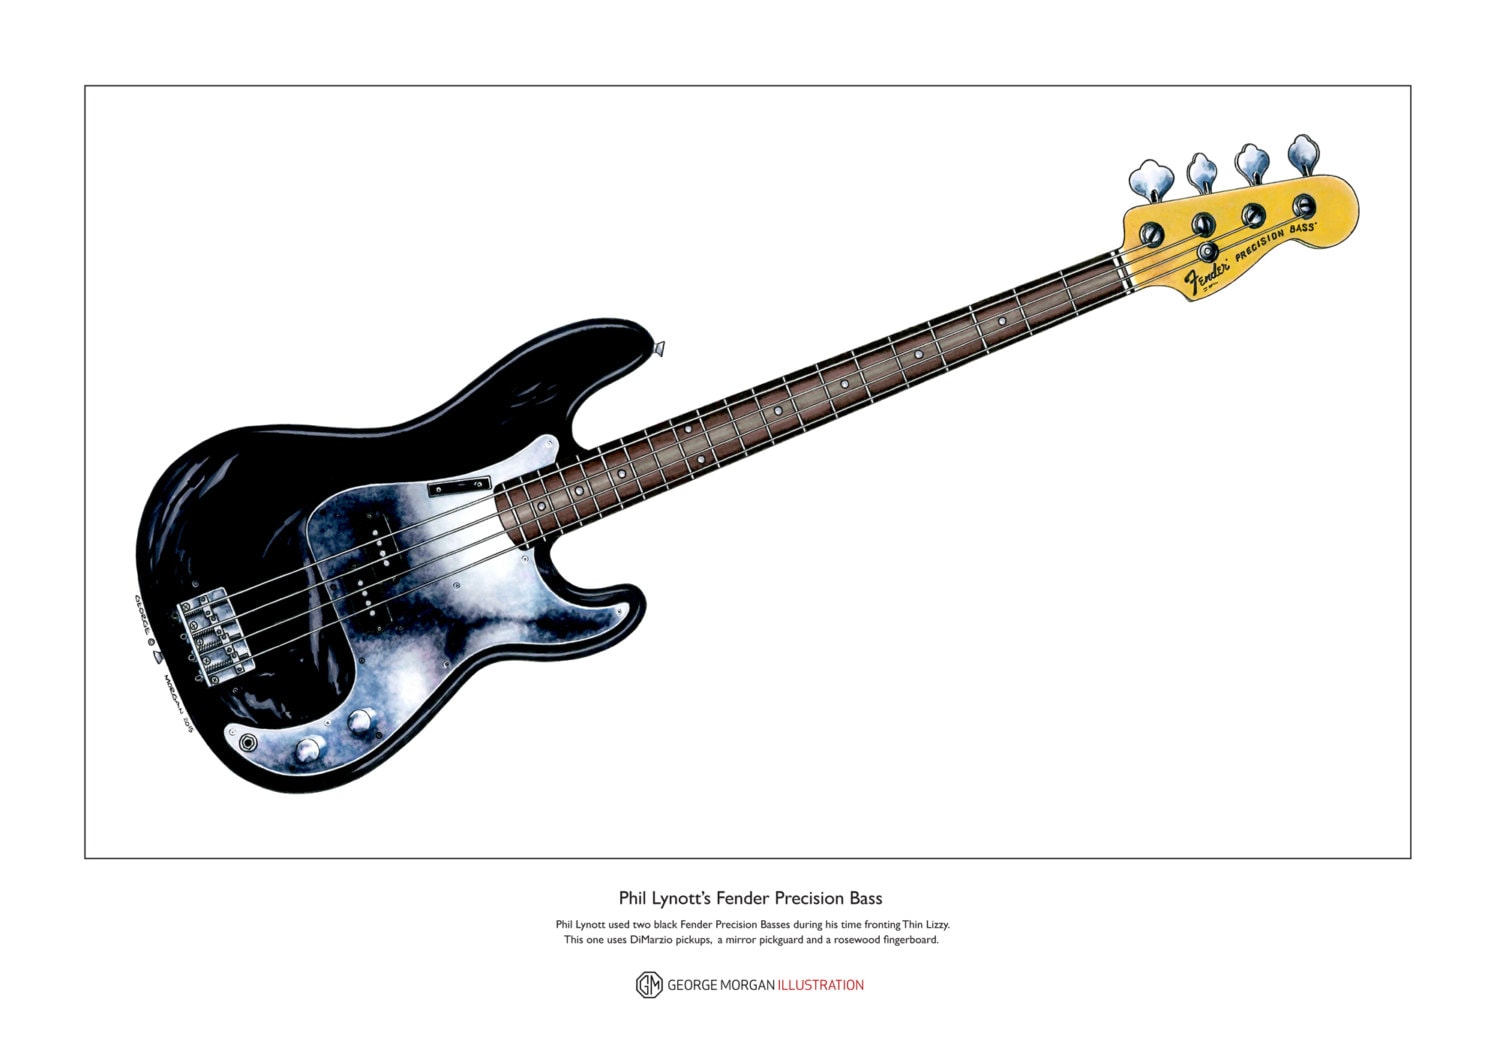 Phil Lynott's Fender P Bass Limited Edition Fine Art Print A3 size